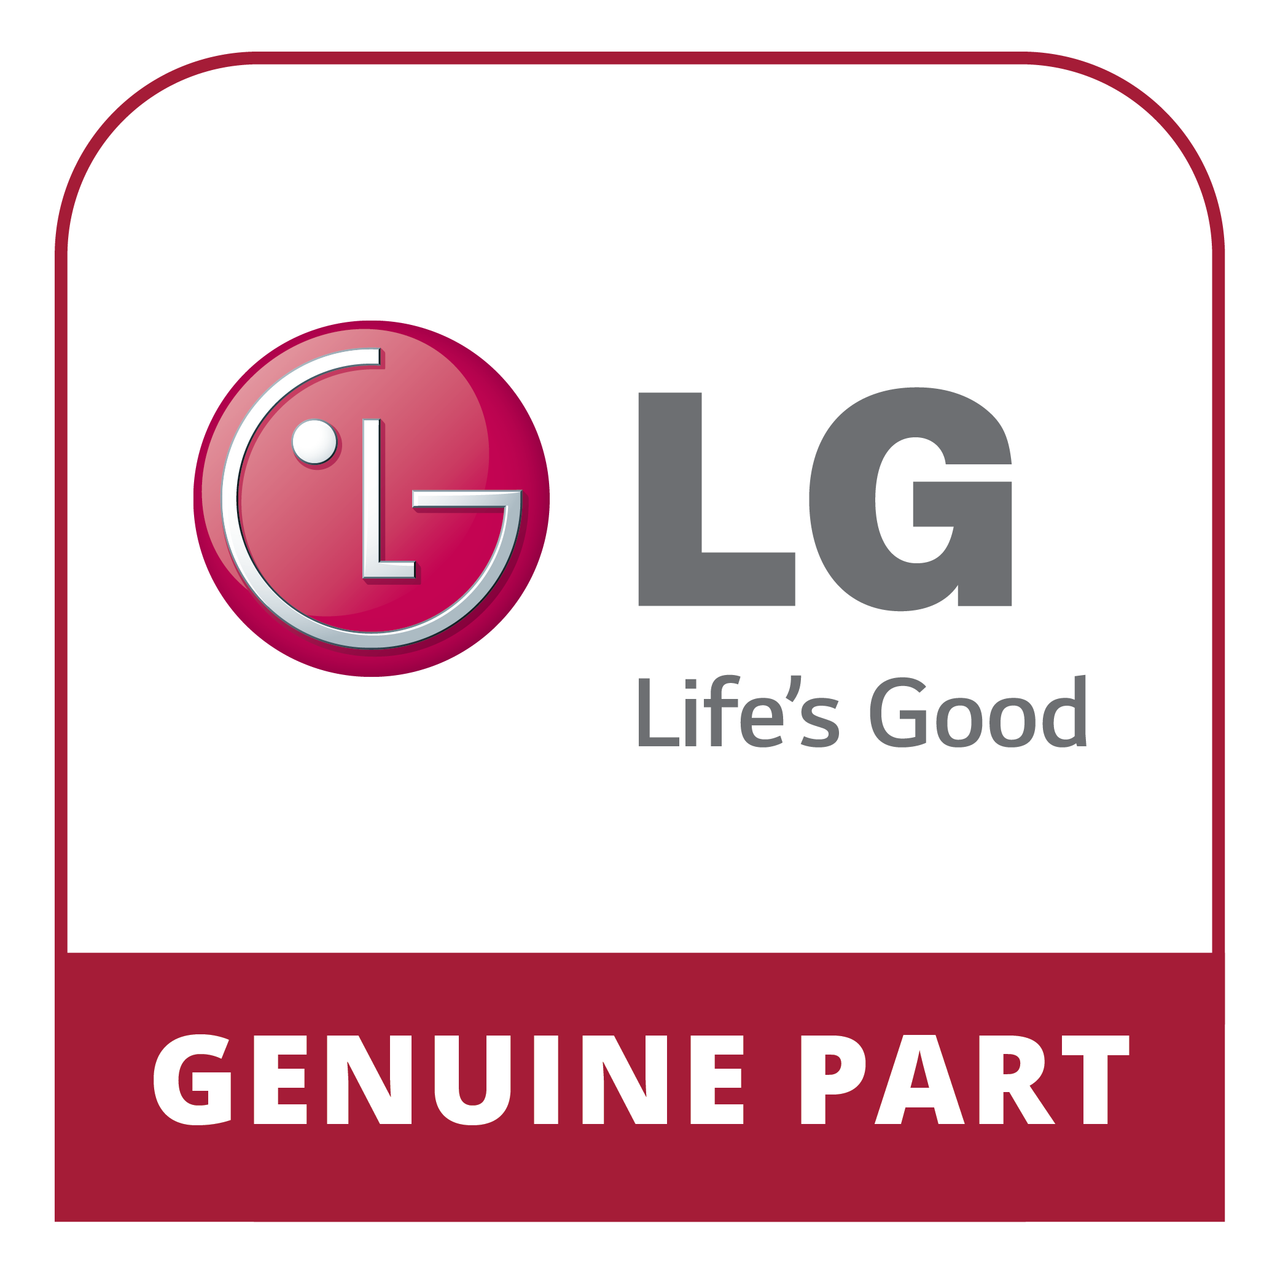 LG AJR55754311 - Exchanger Assembly - Genuine LG Part